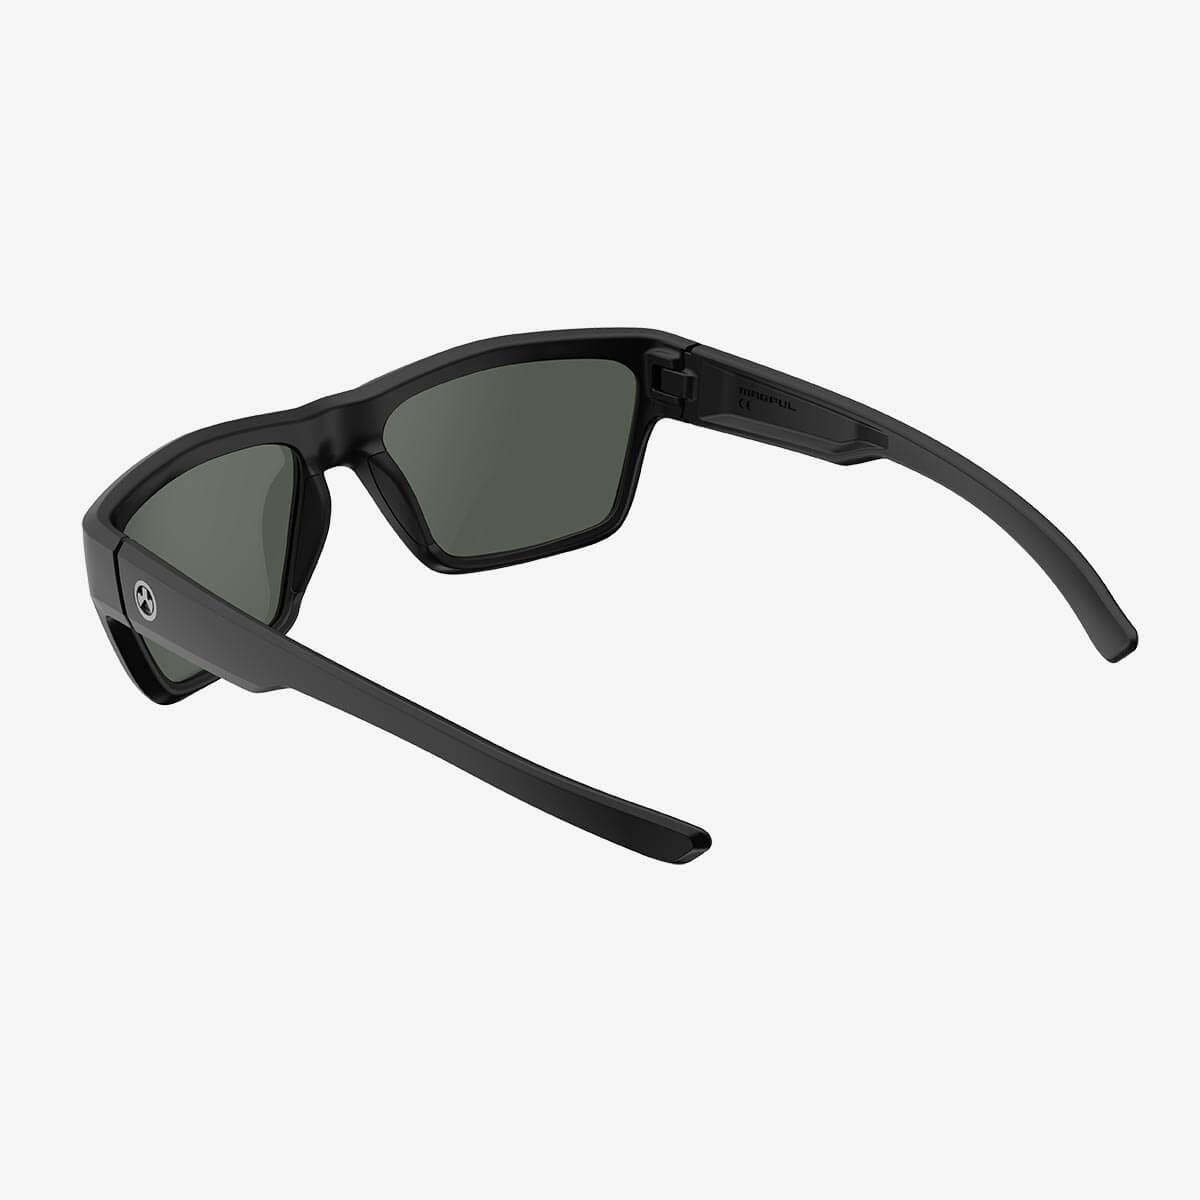 Magpul - Pivot Eyewear, Polarized - Black Frame, Gray Green Lens